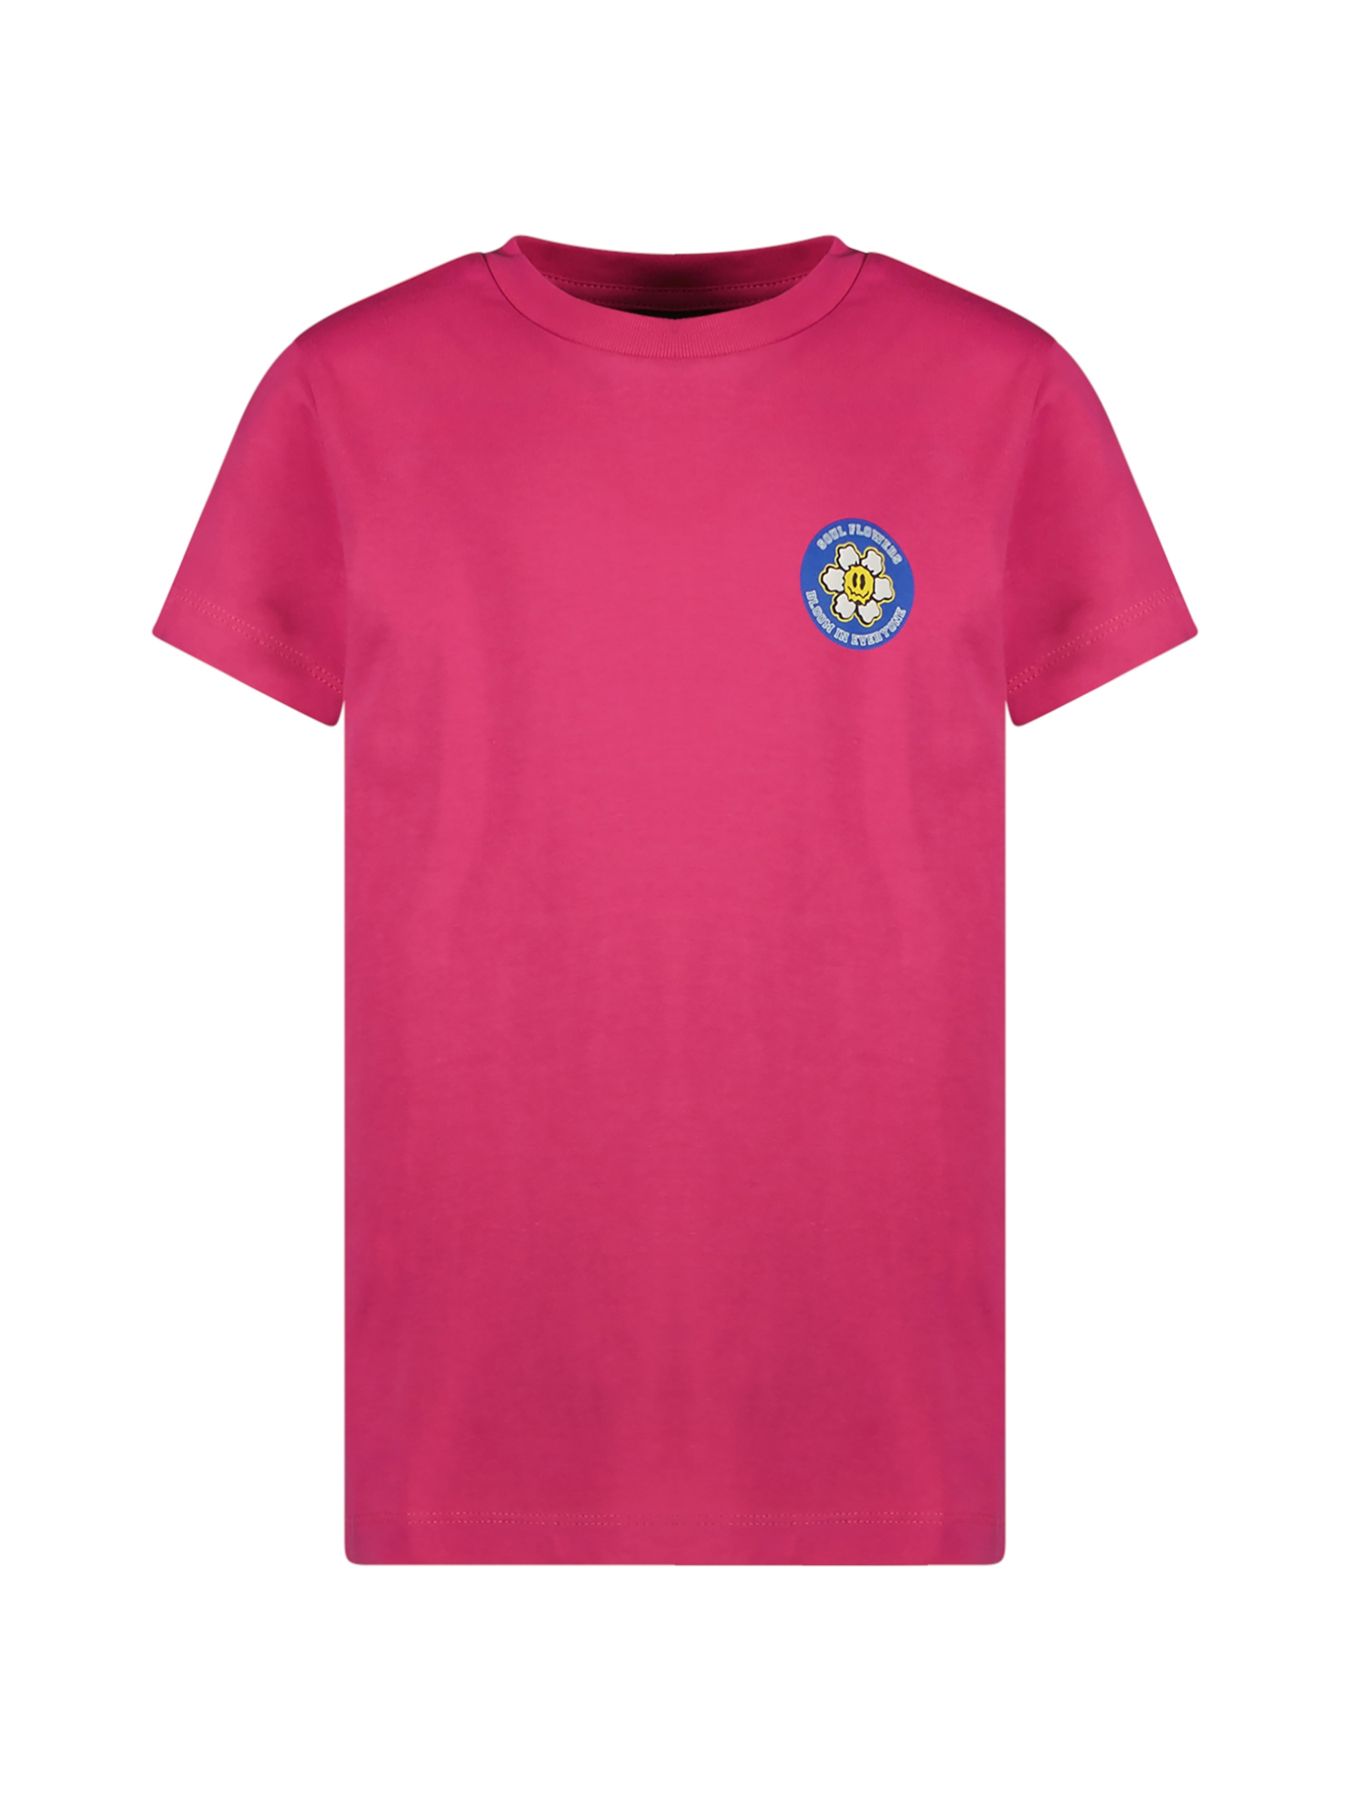 Cars jeans T-shirt Violett Jr. 69 pink 00107501-EKA03000200000044